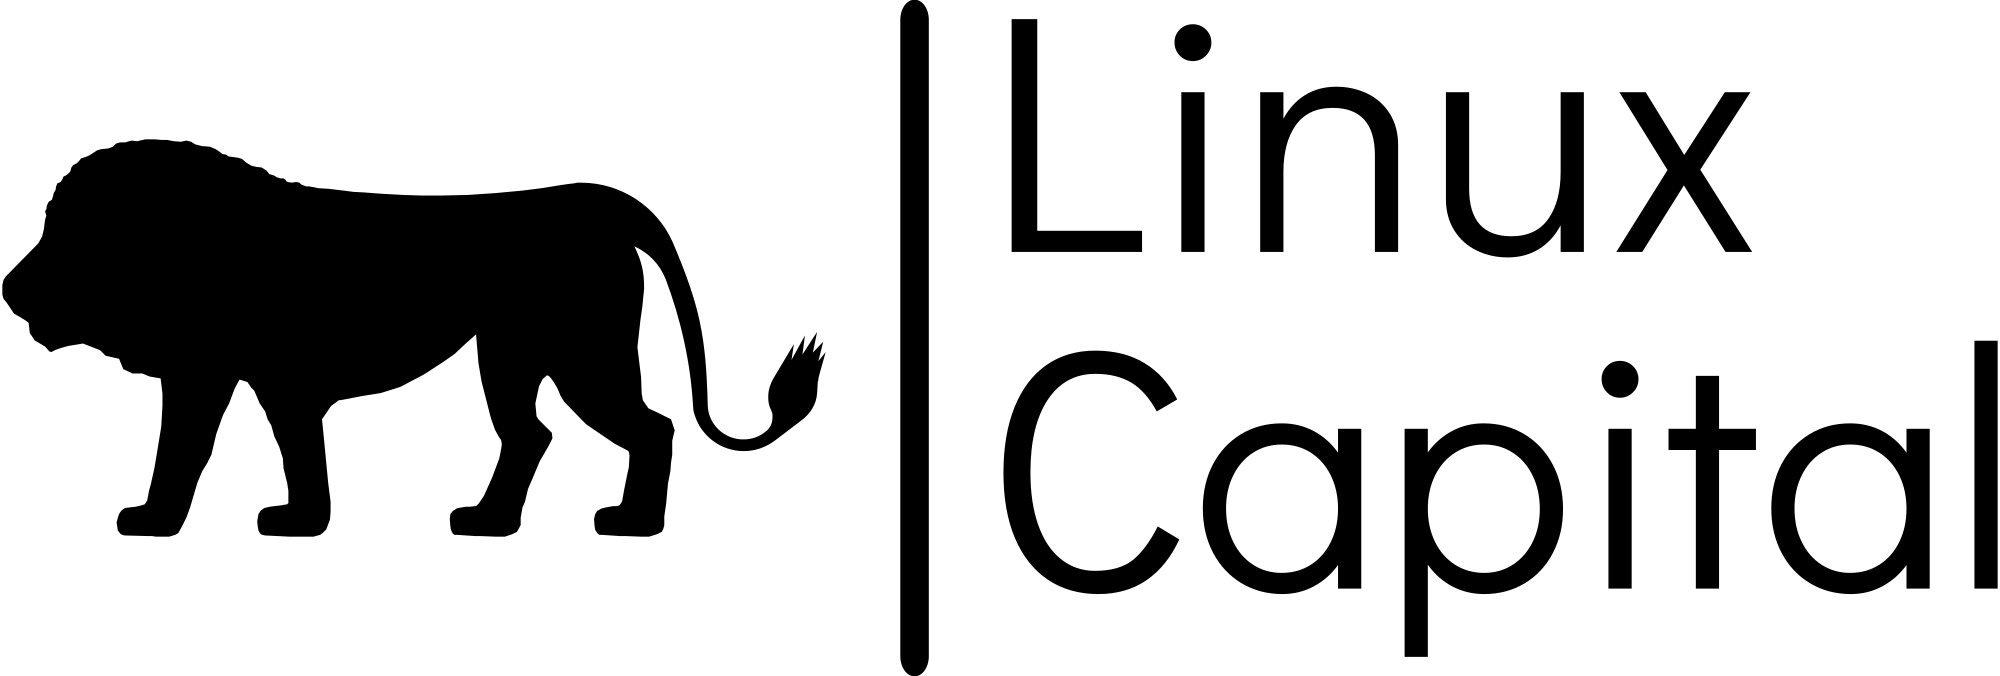 Linux Capital logo